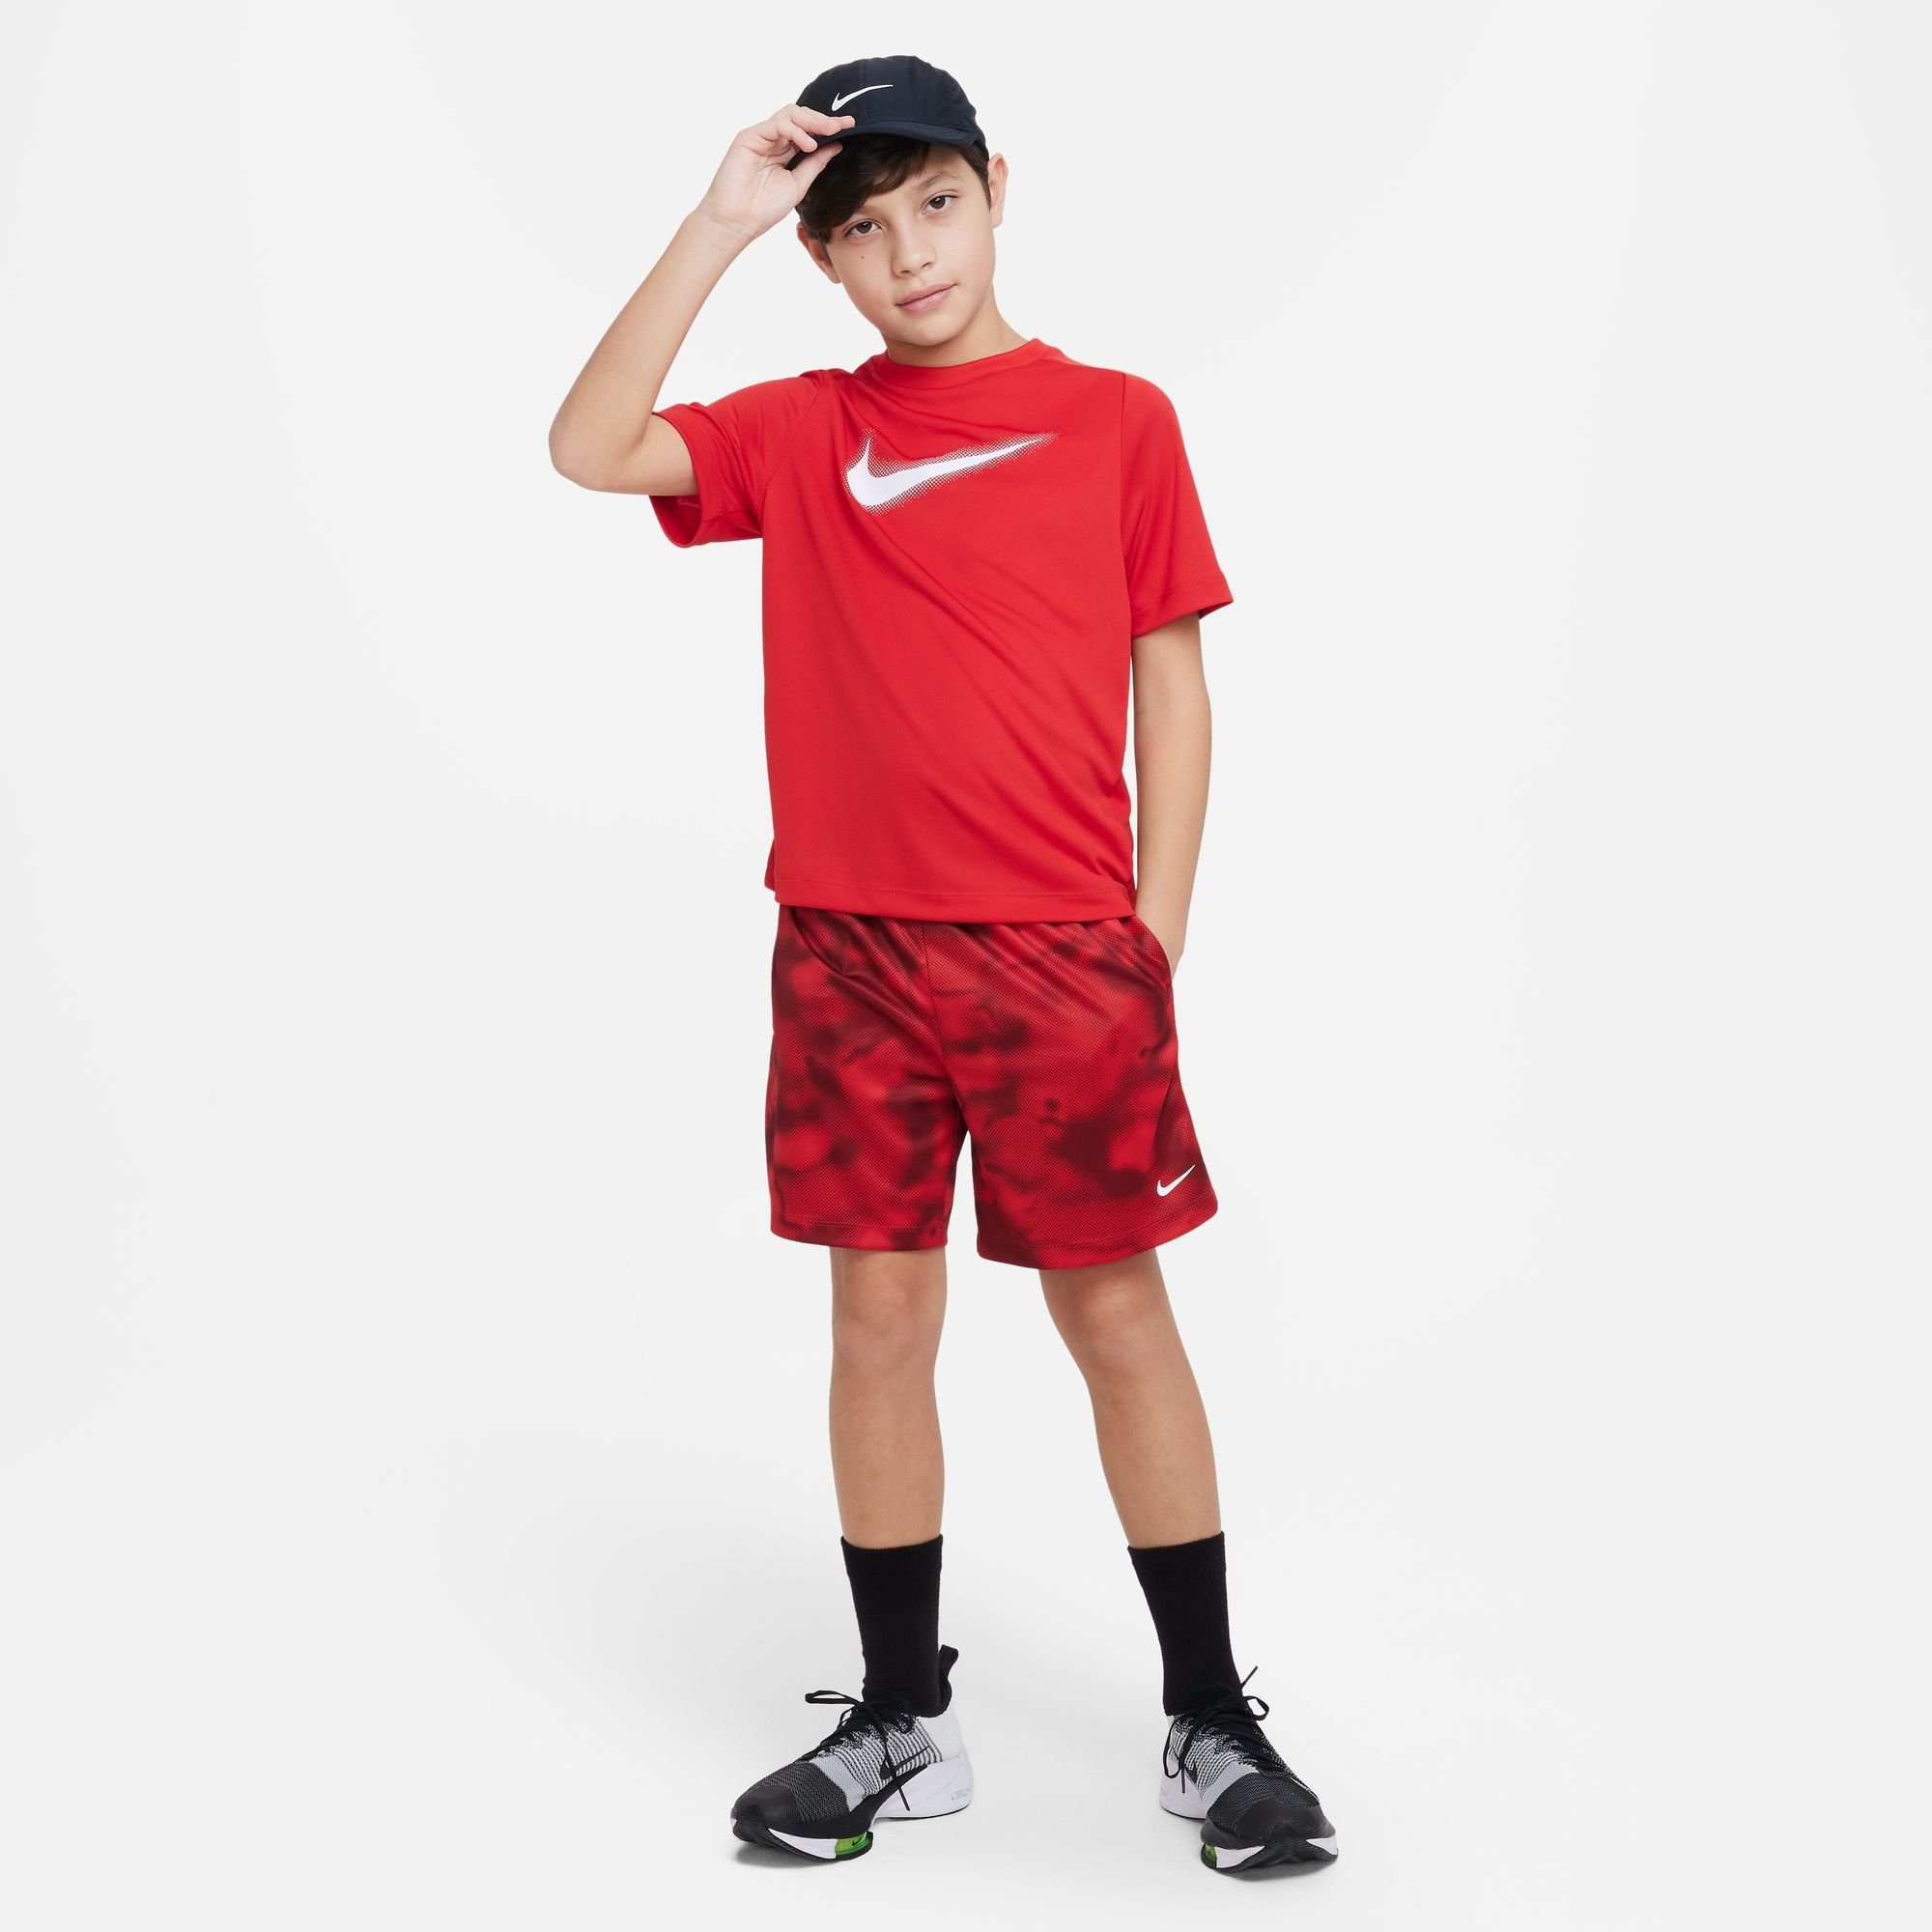 MULTI+ GRAPHIC Nike TRAINING KIDS' rot DRI-FIT (BOYS) BIG Trainingsshirt TOP